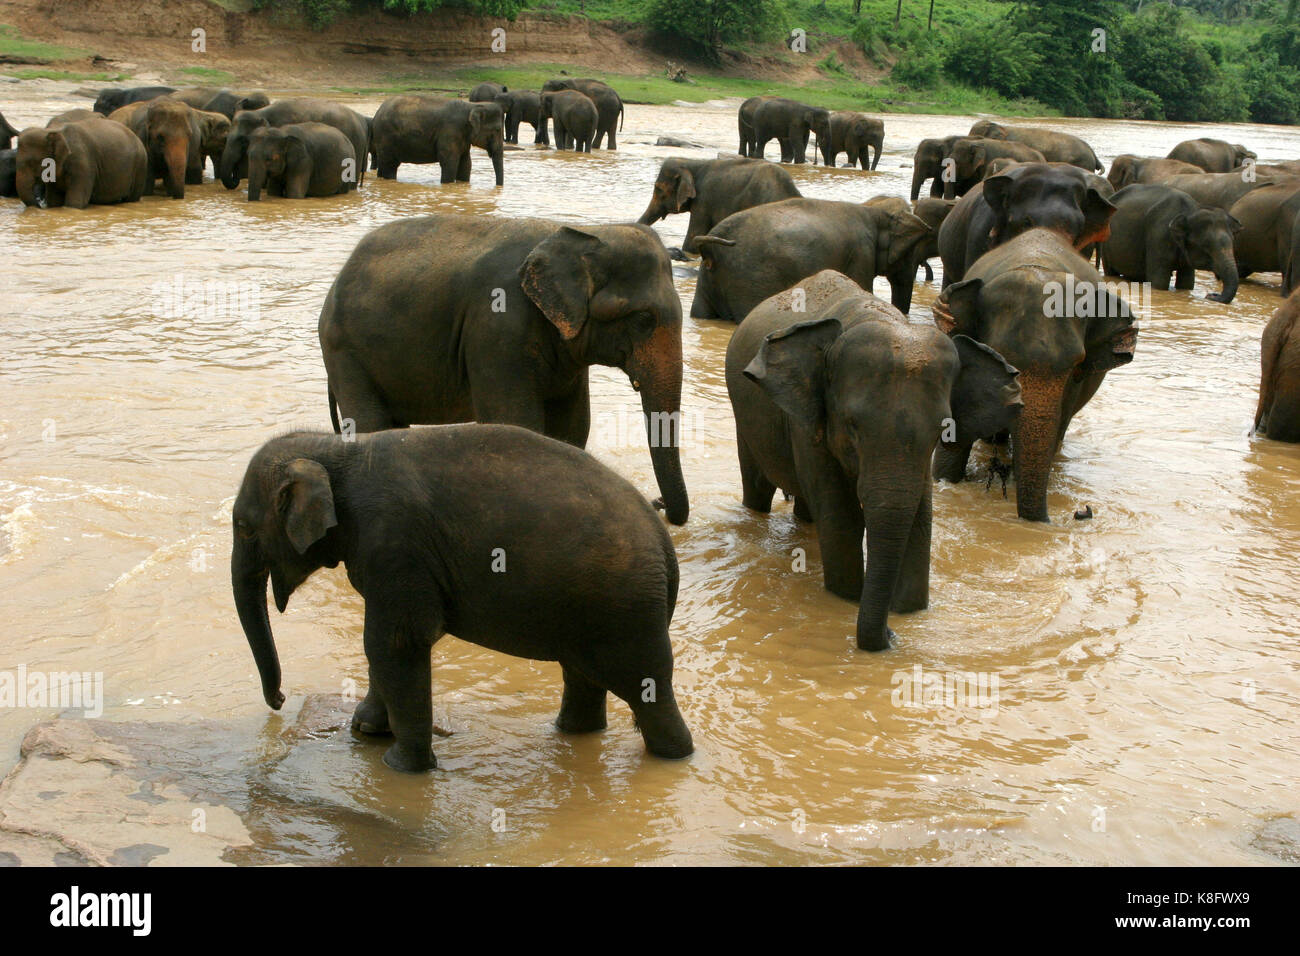 Pinnawala Elefantenwaisenhaus, Sri Lanka Elefanten beim Baden am Ma Oya Fluss in Pinnawala Elefantenwaisenhaus in der Sabaragamuwa Provinz, auf halbem Weg zwischen Th Stockfoto